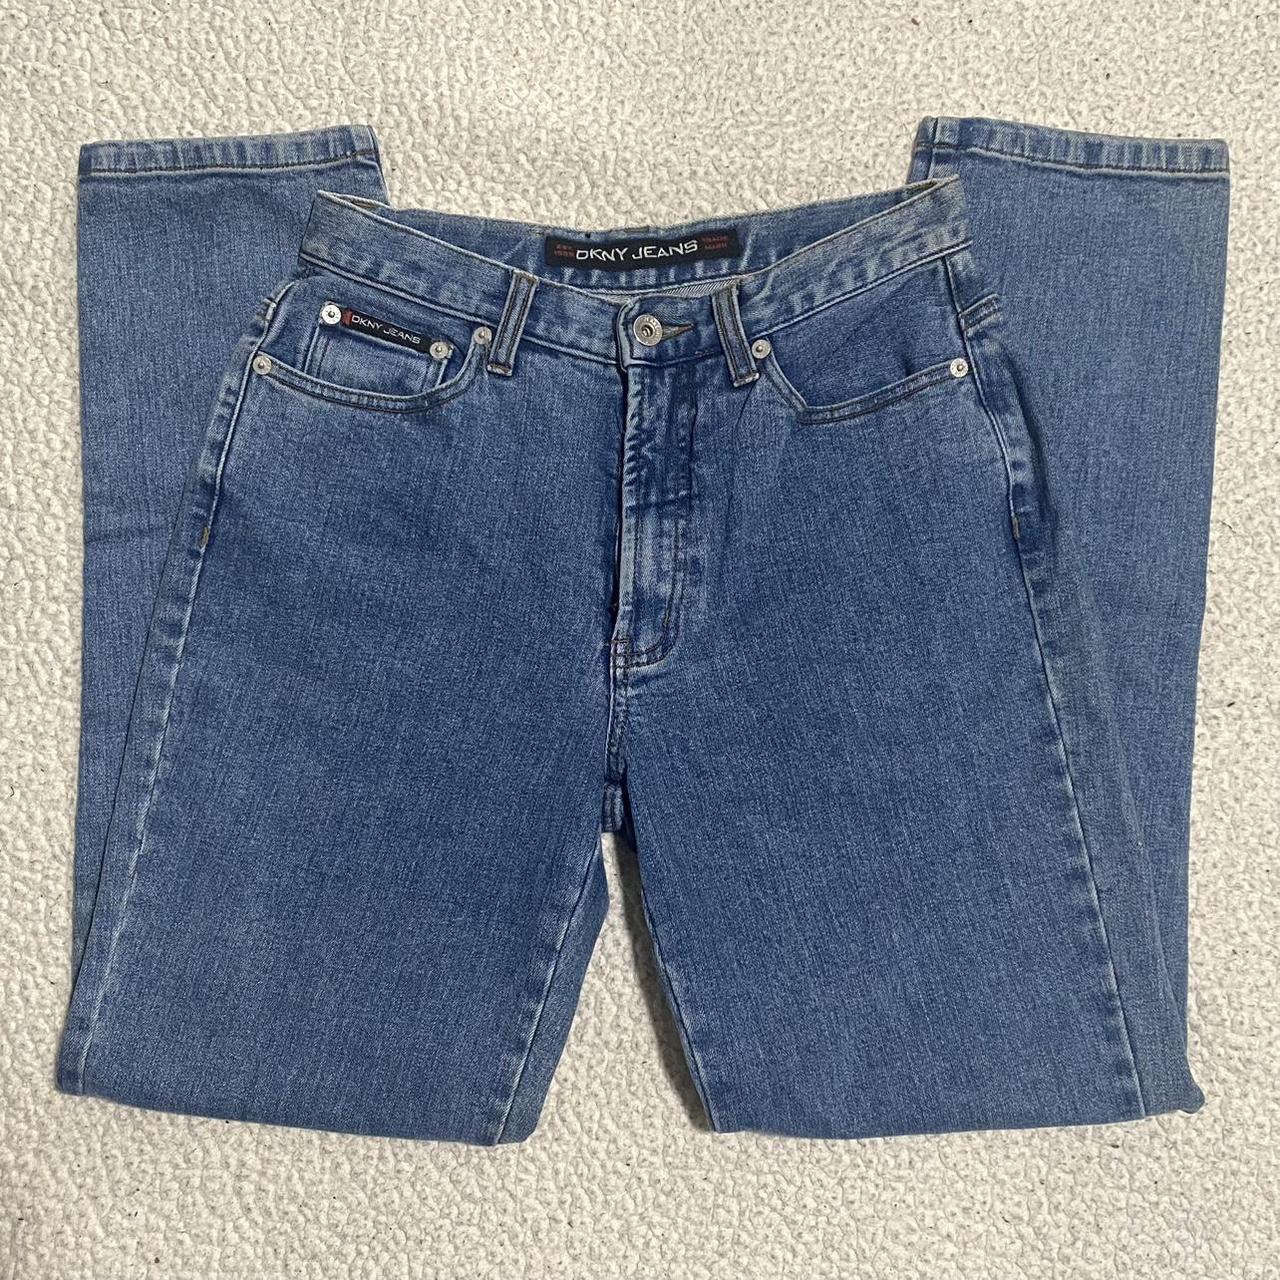 Vintage DKNY Jeans